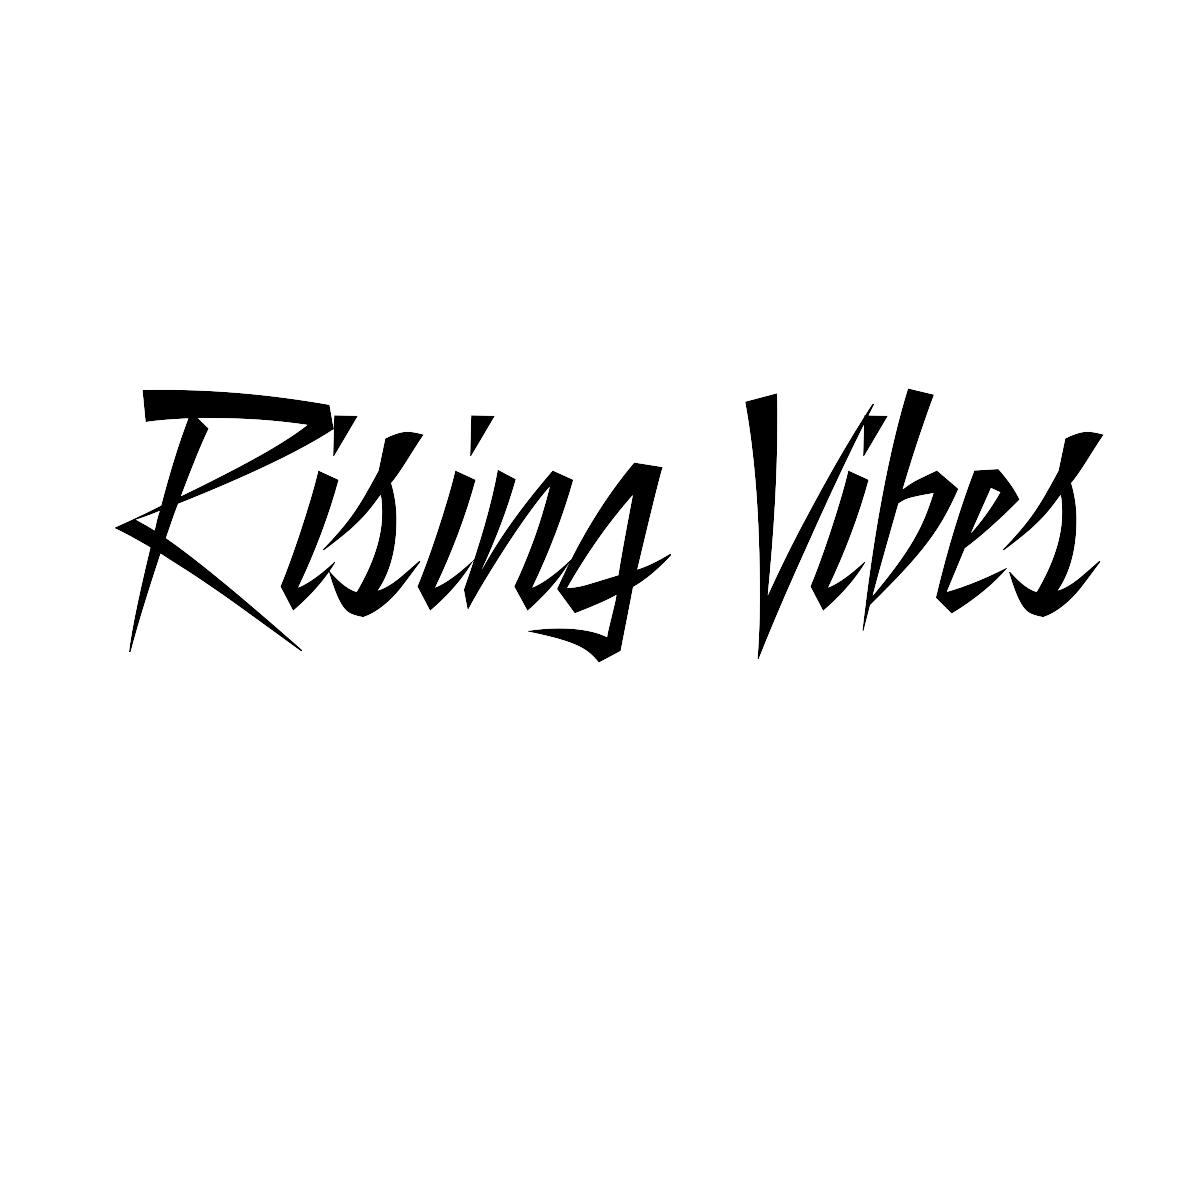 Rising vibes logo